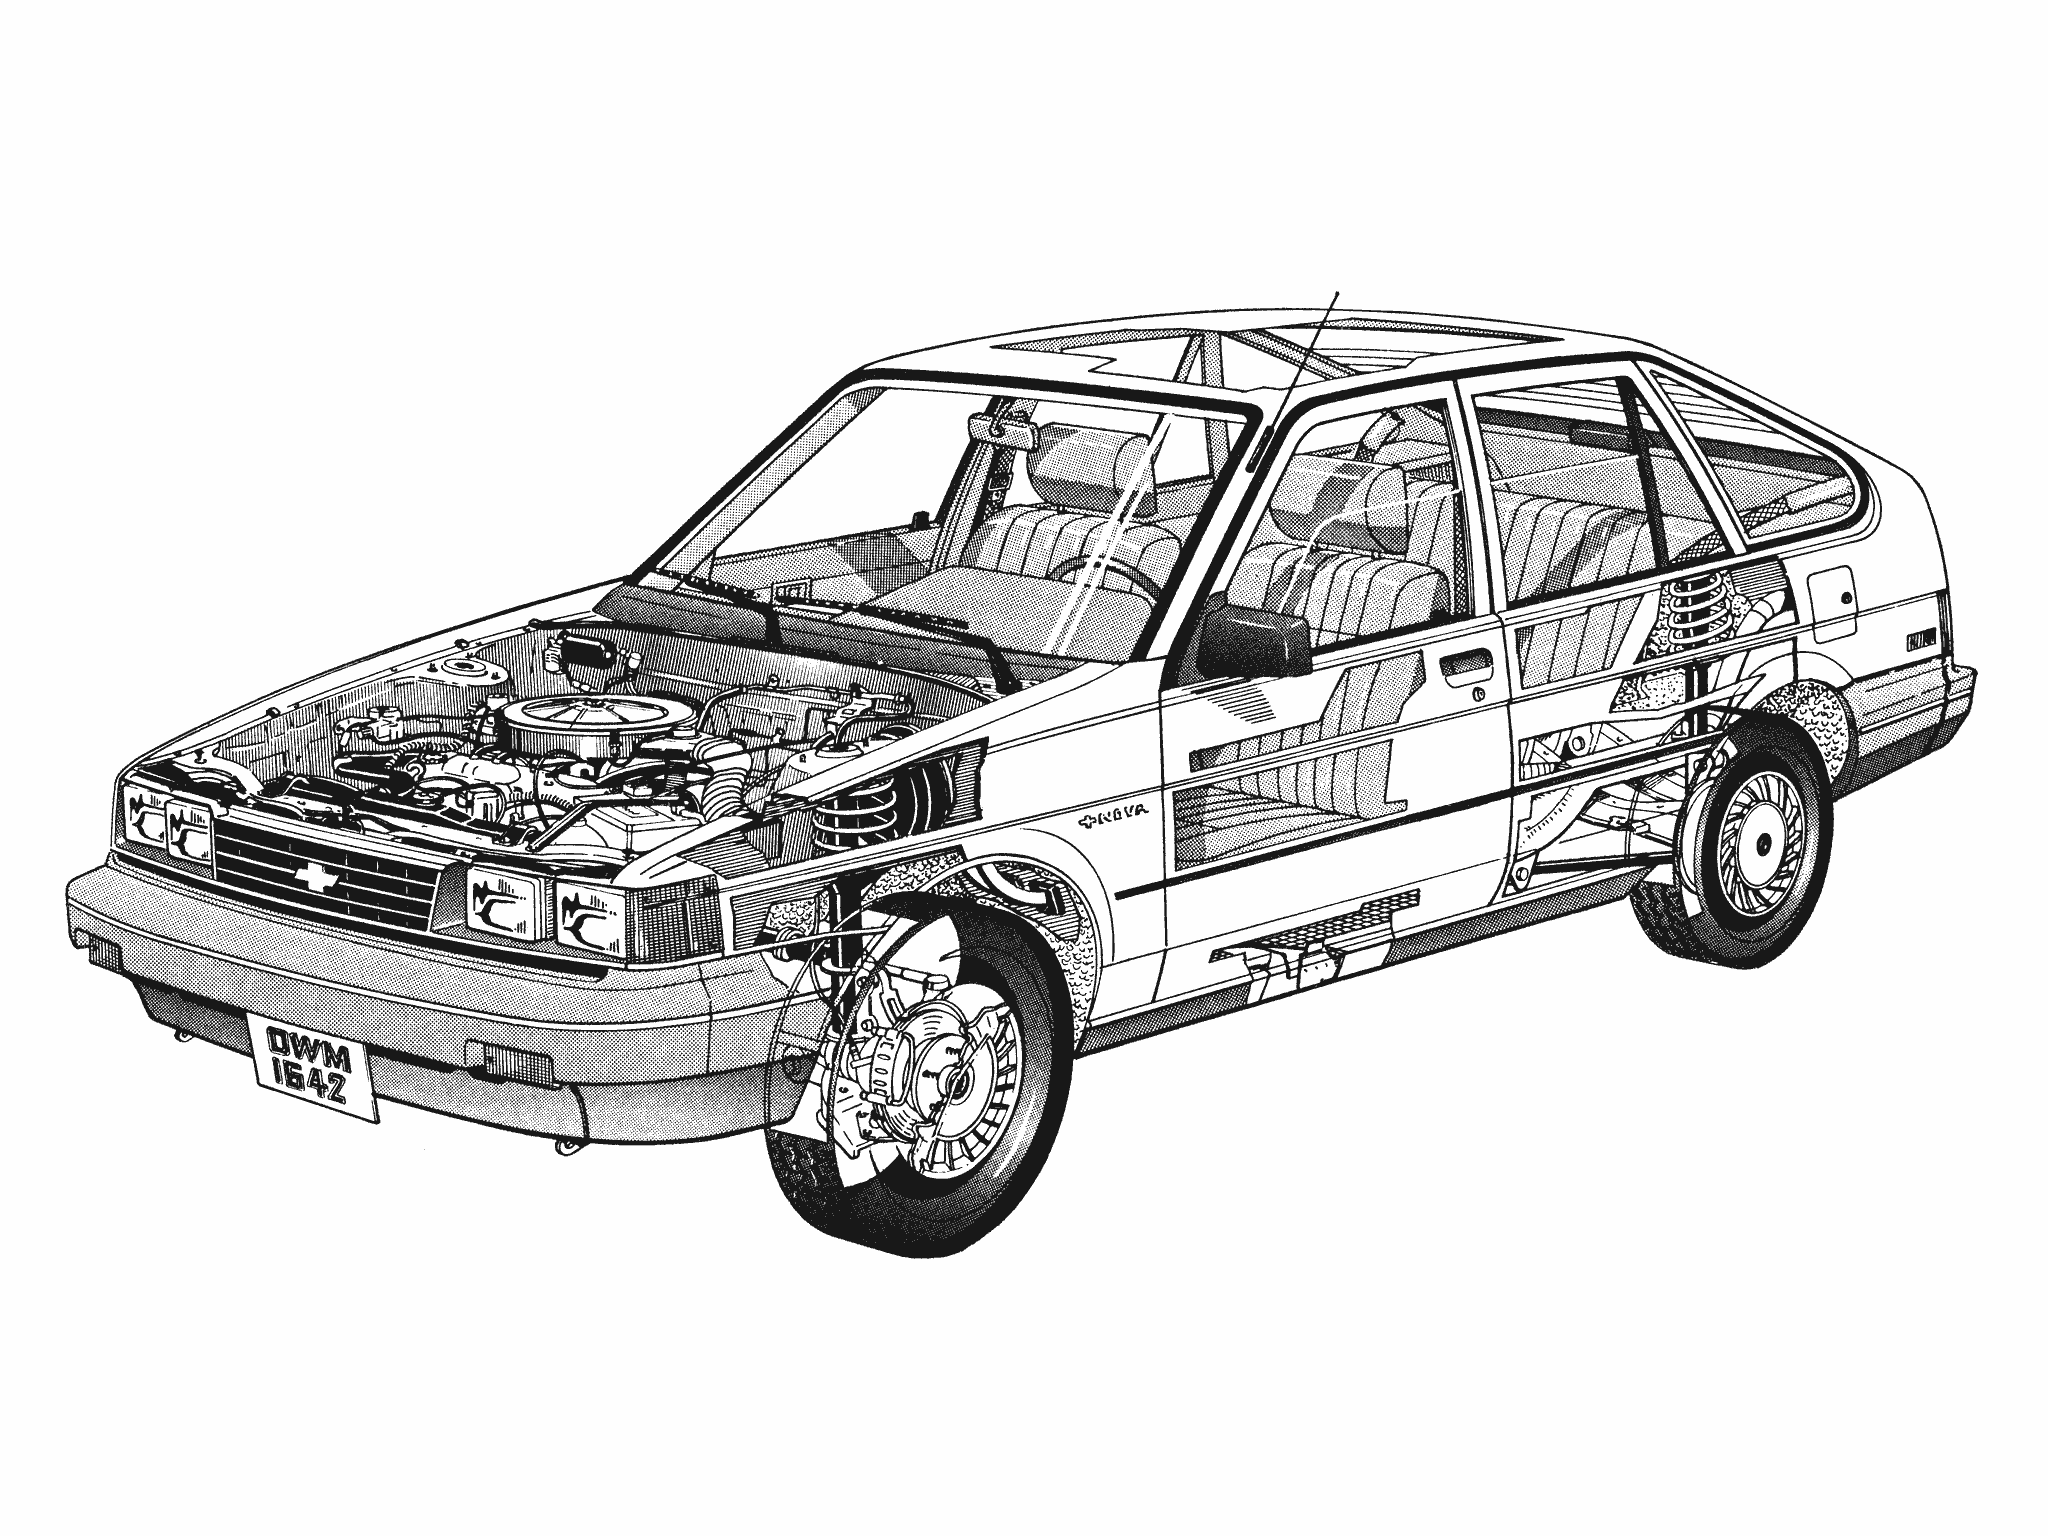 Chevrolet Nova cutaway drawing